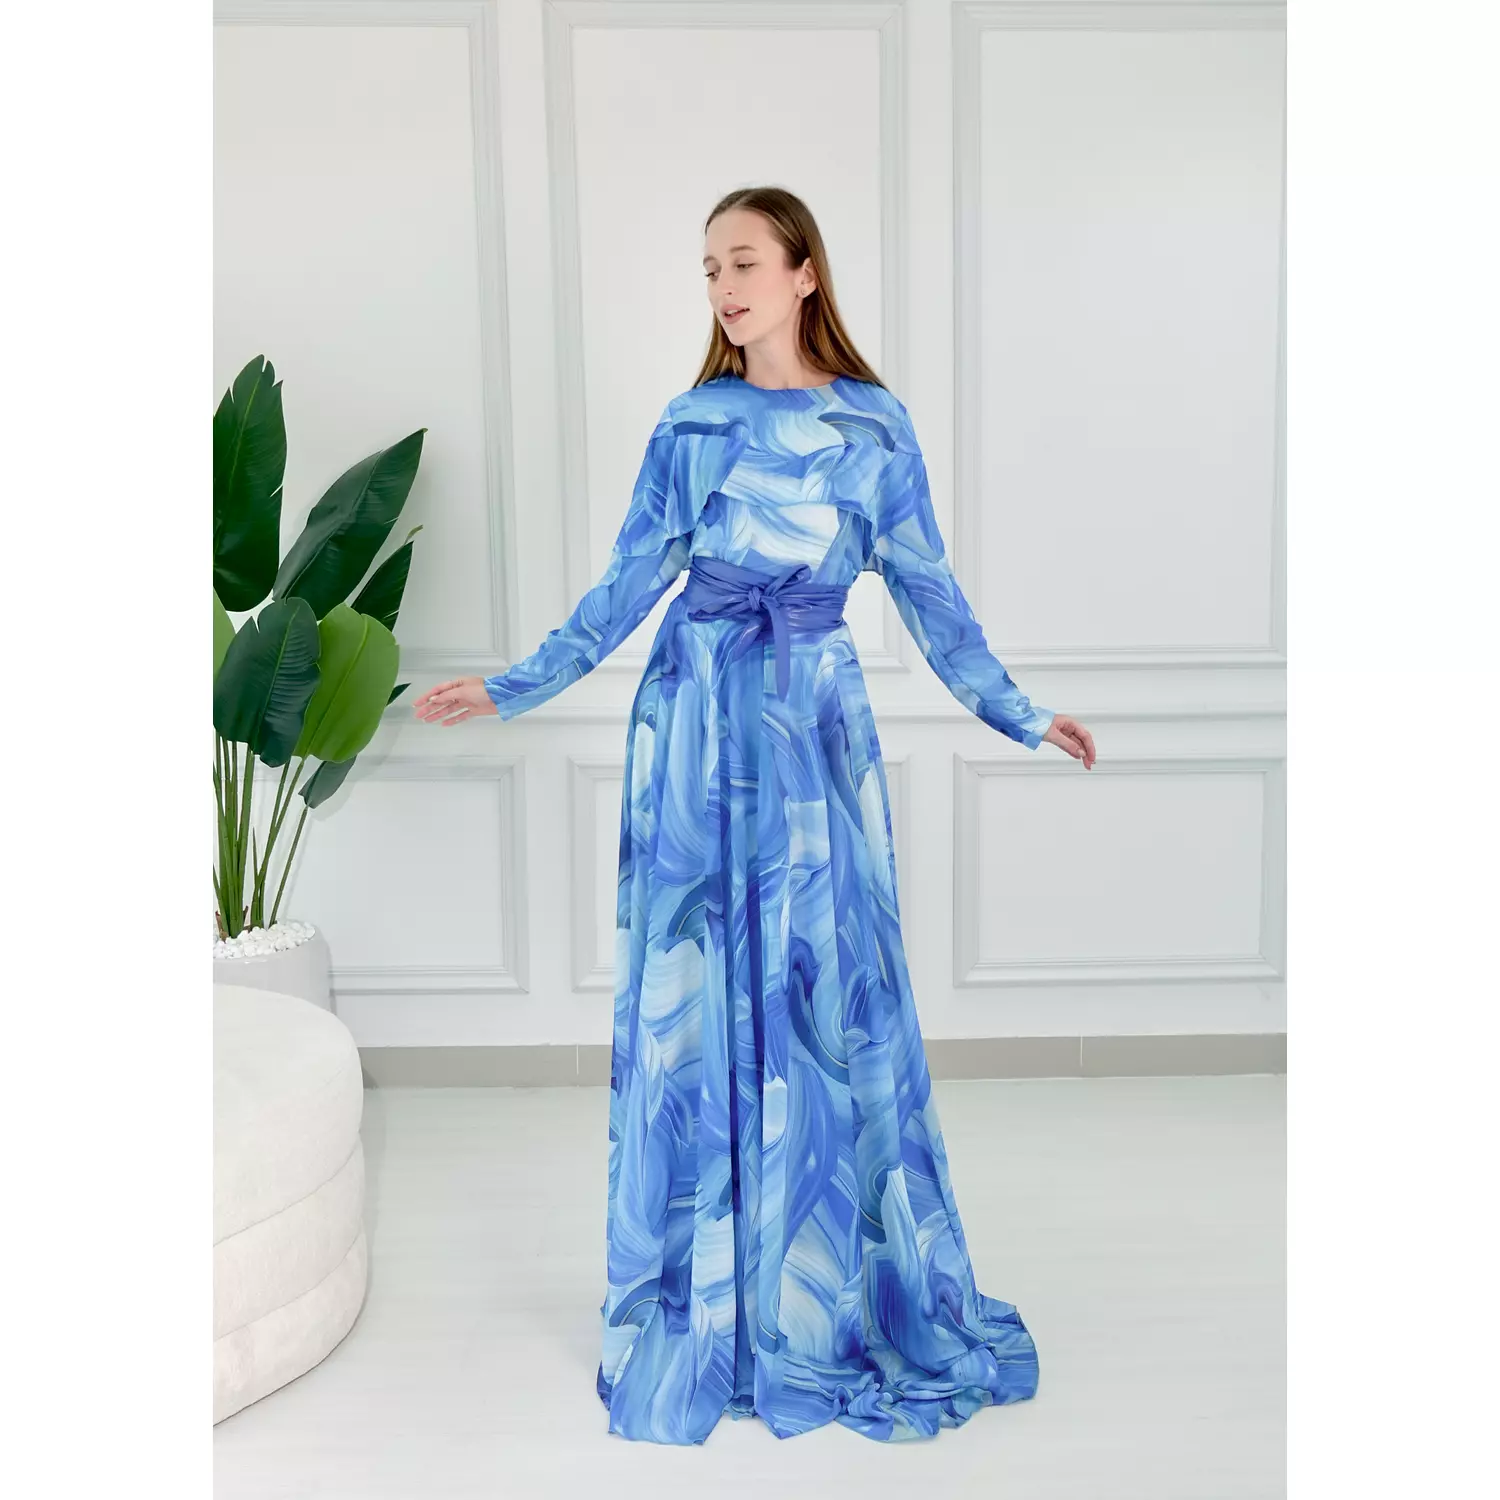 Mermaid Blue Dress hover image